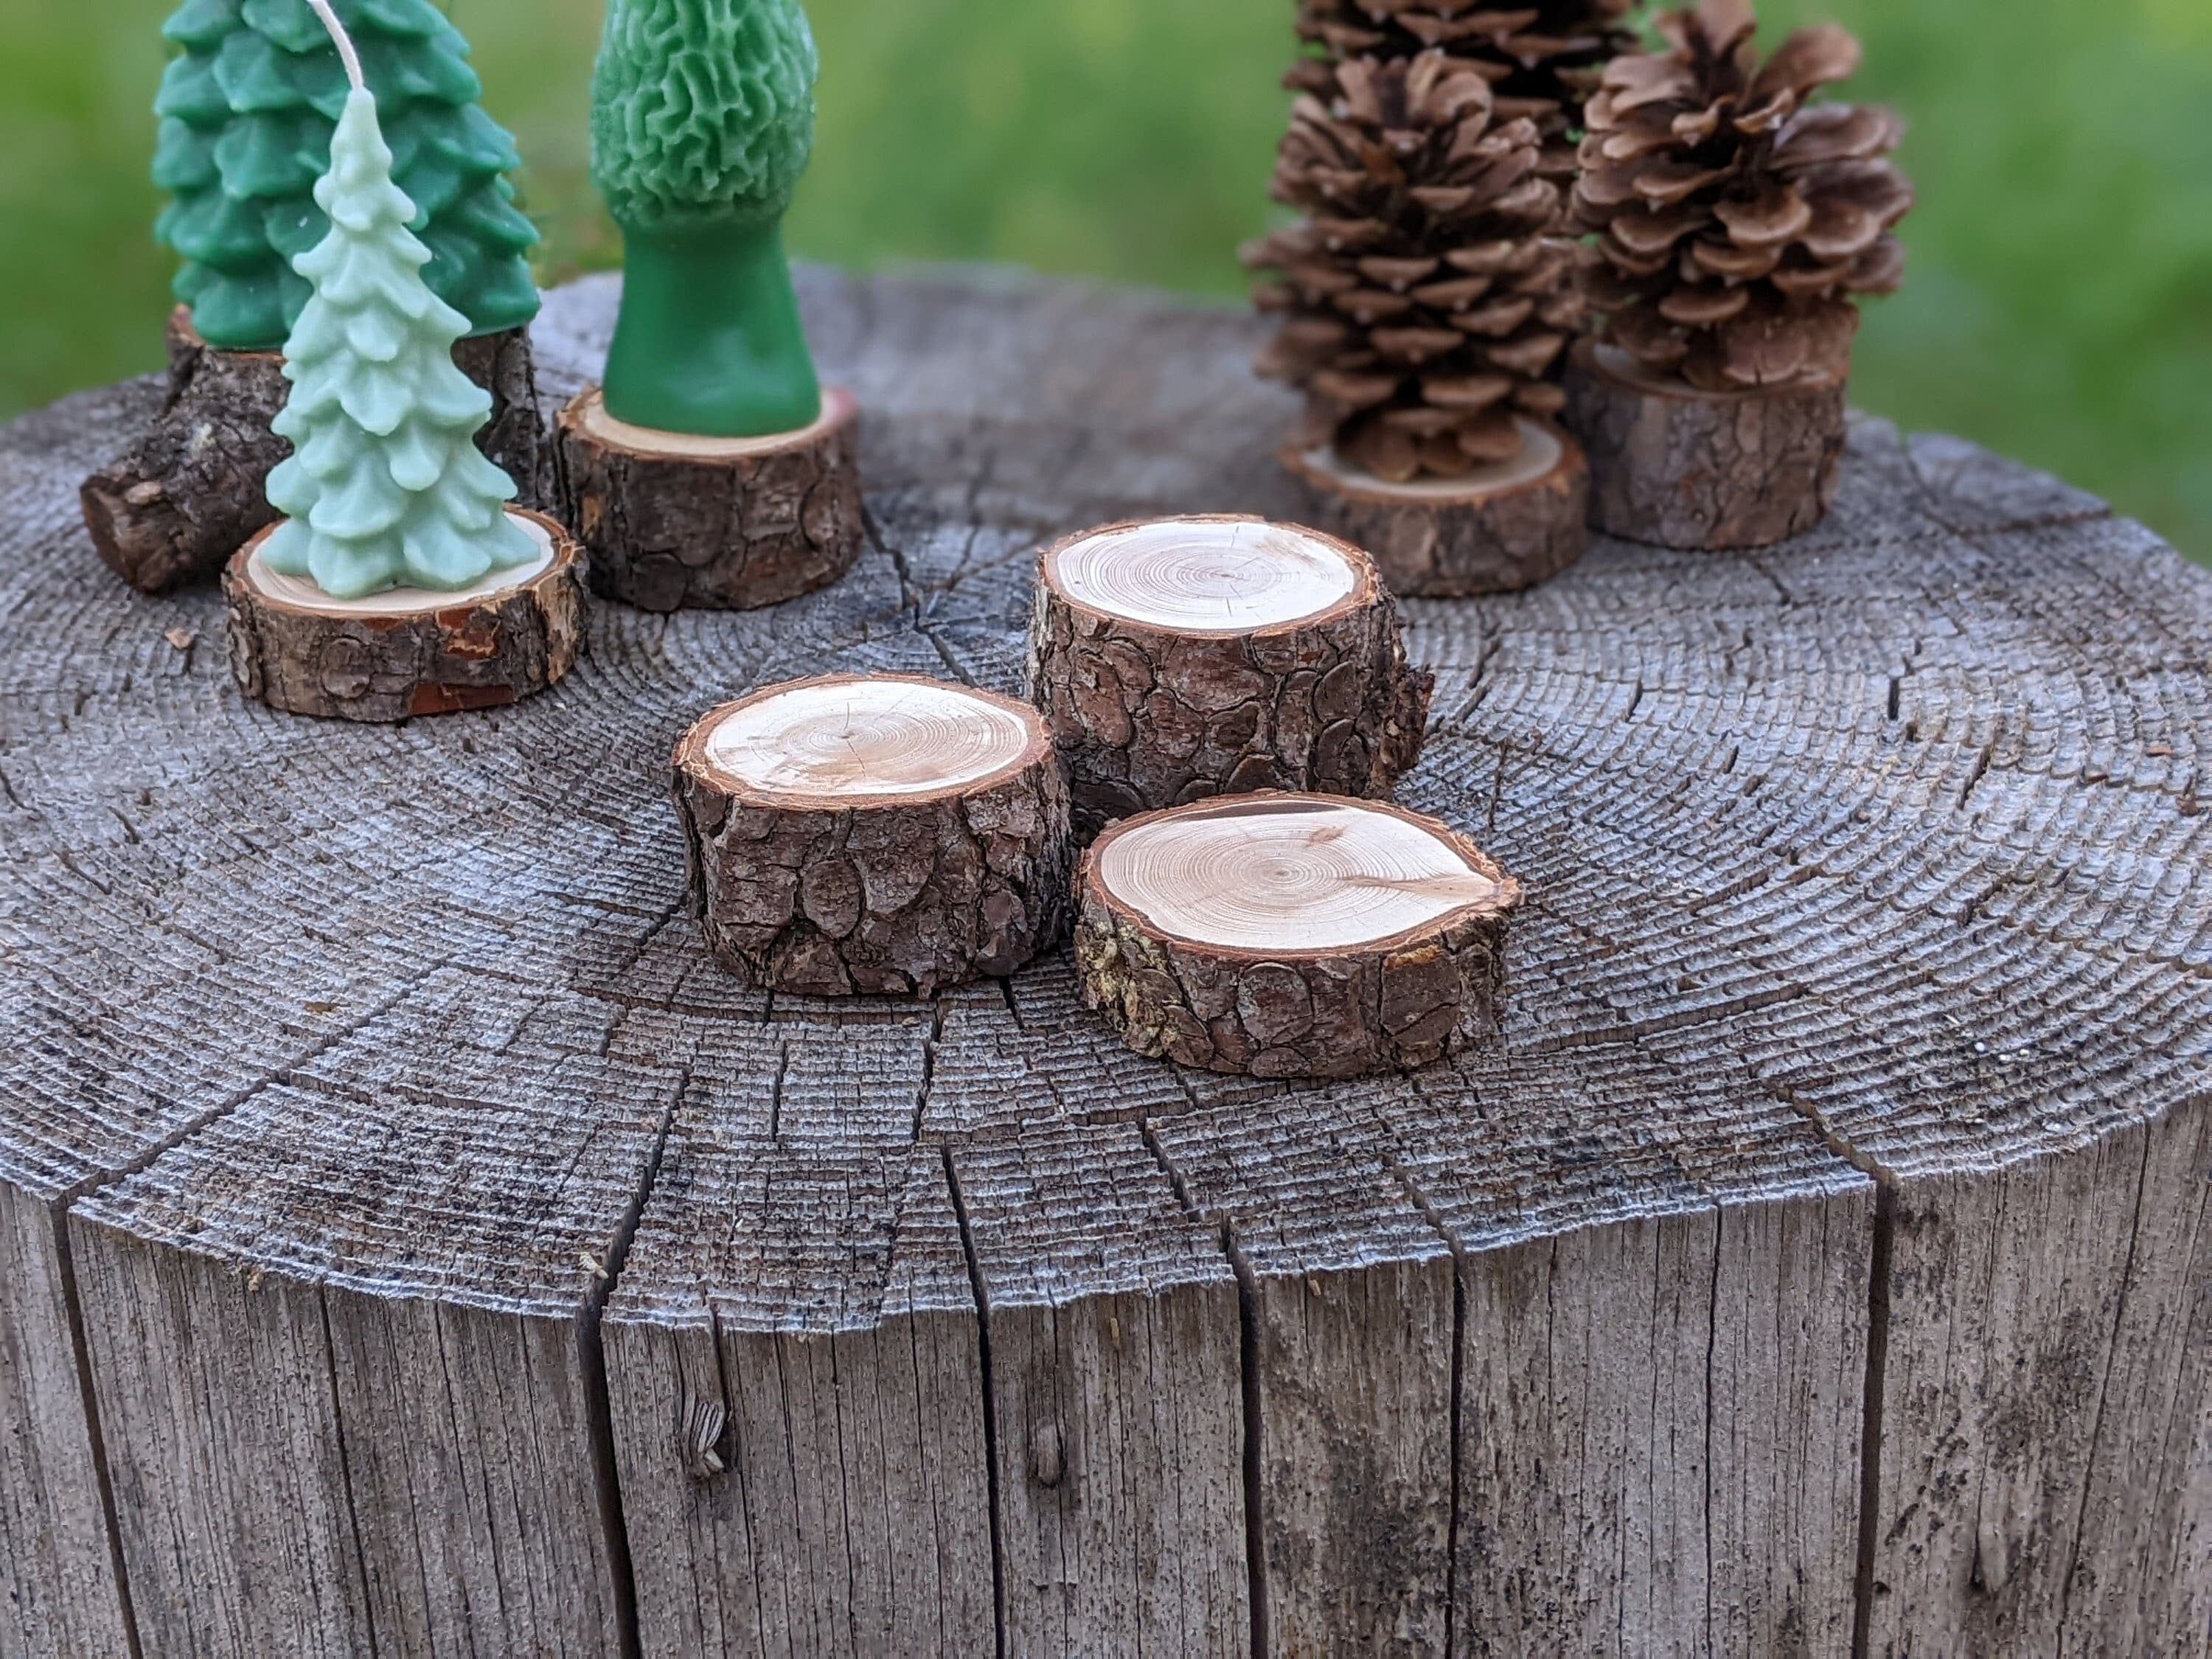 Wooden Riser- Miniature Plant Stand- Photo Display- Decor Riser- Vase -  Kentucky LiveEdge